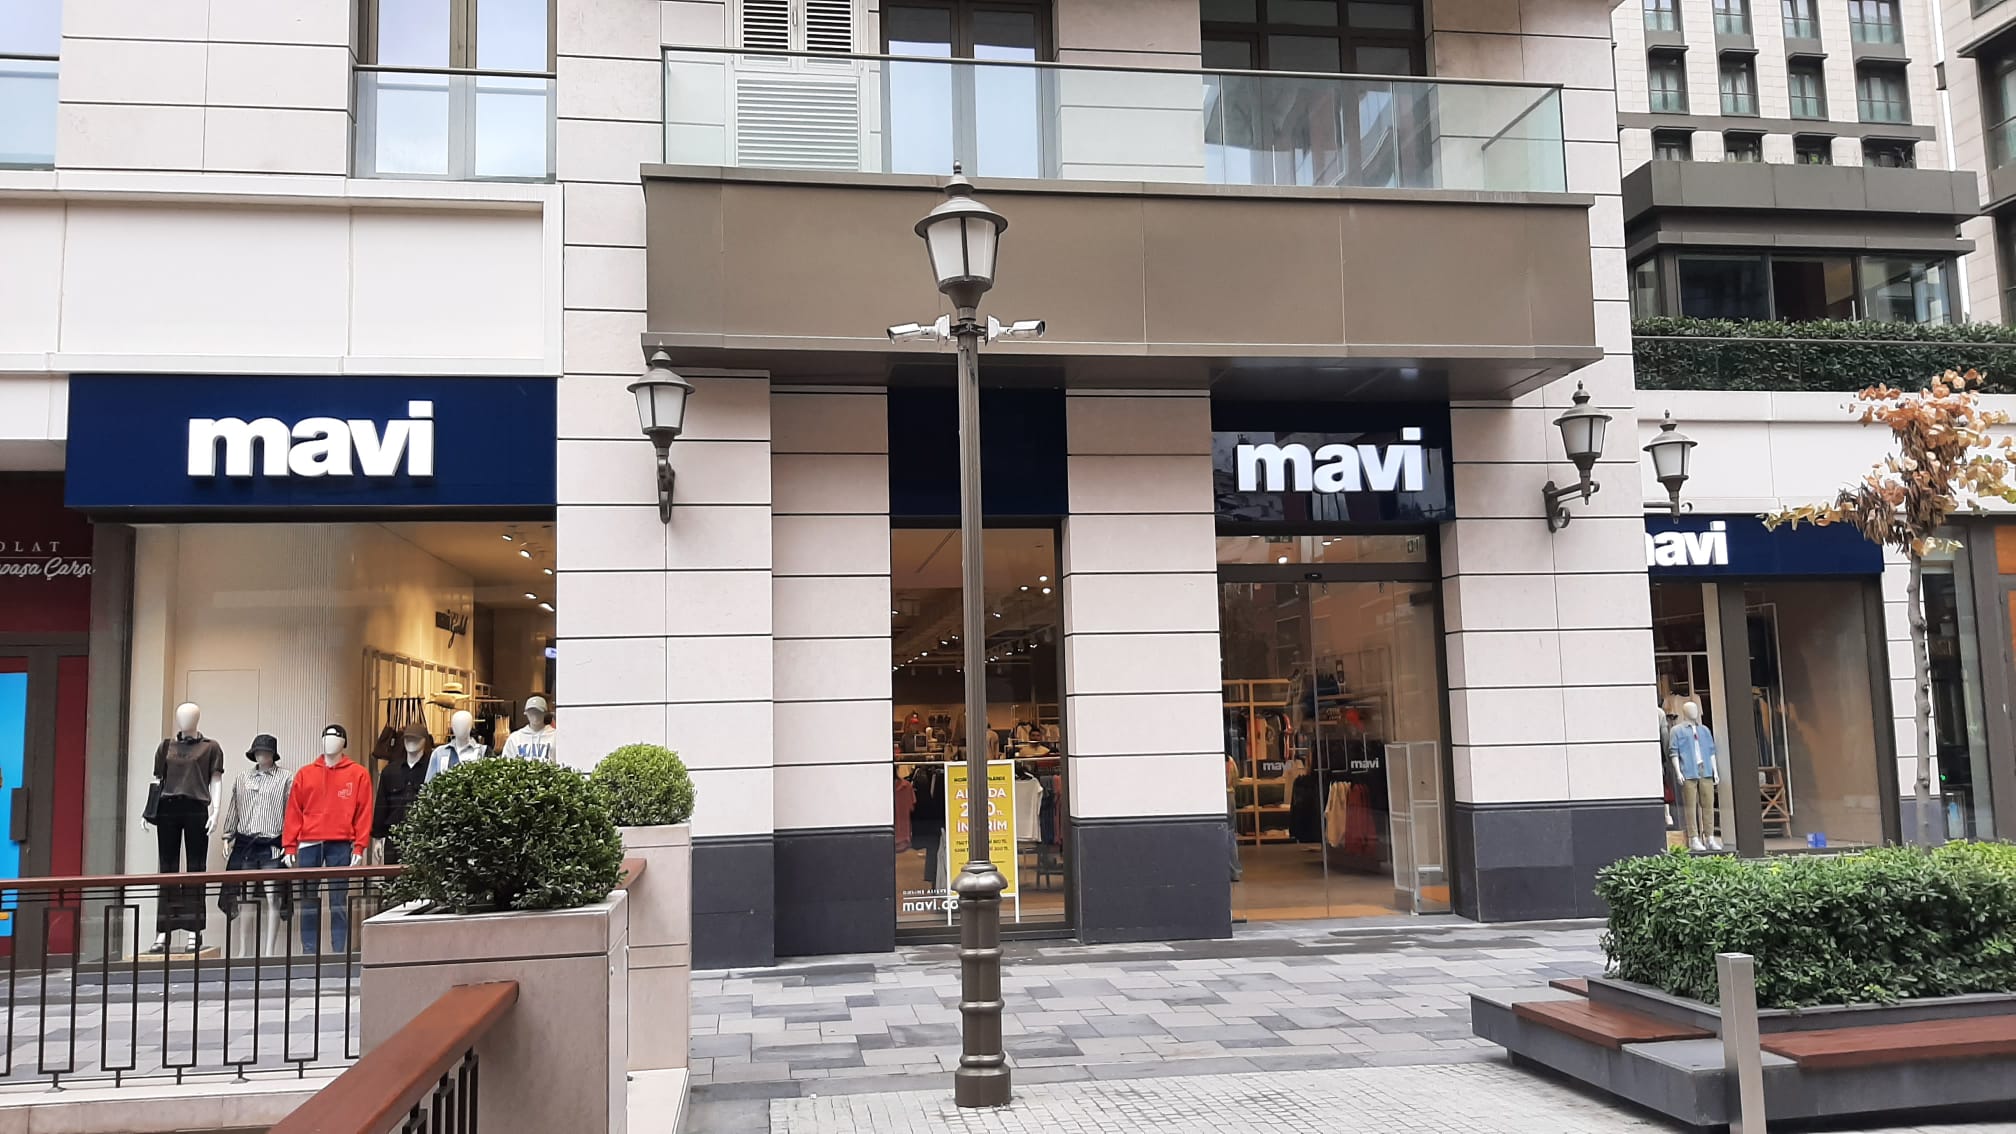 Mavi is opened at Piyalepaşa Çarşı Strip Mall.